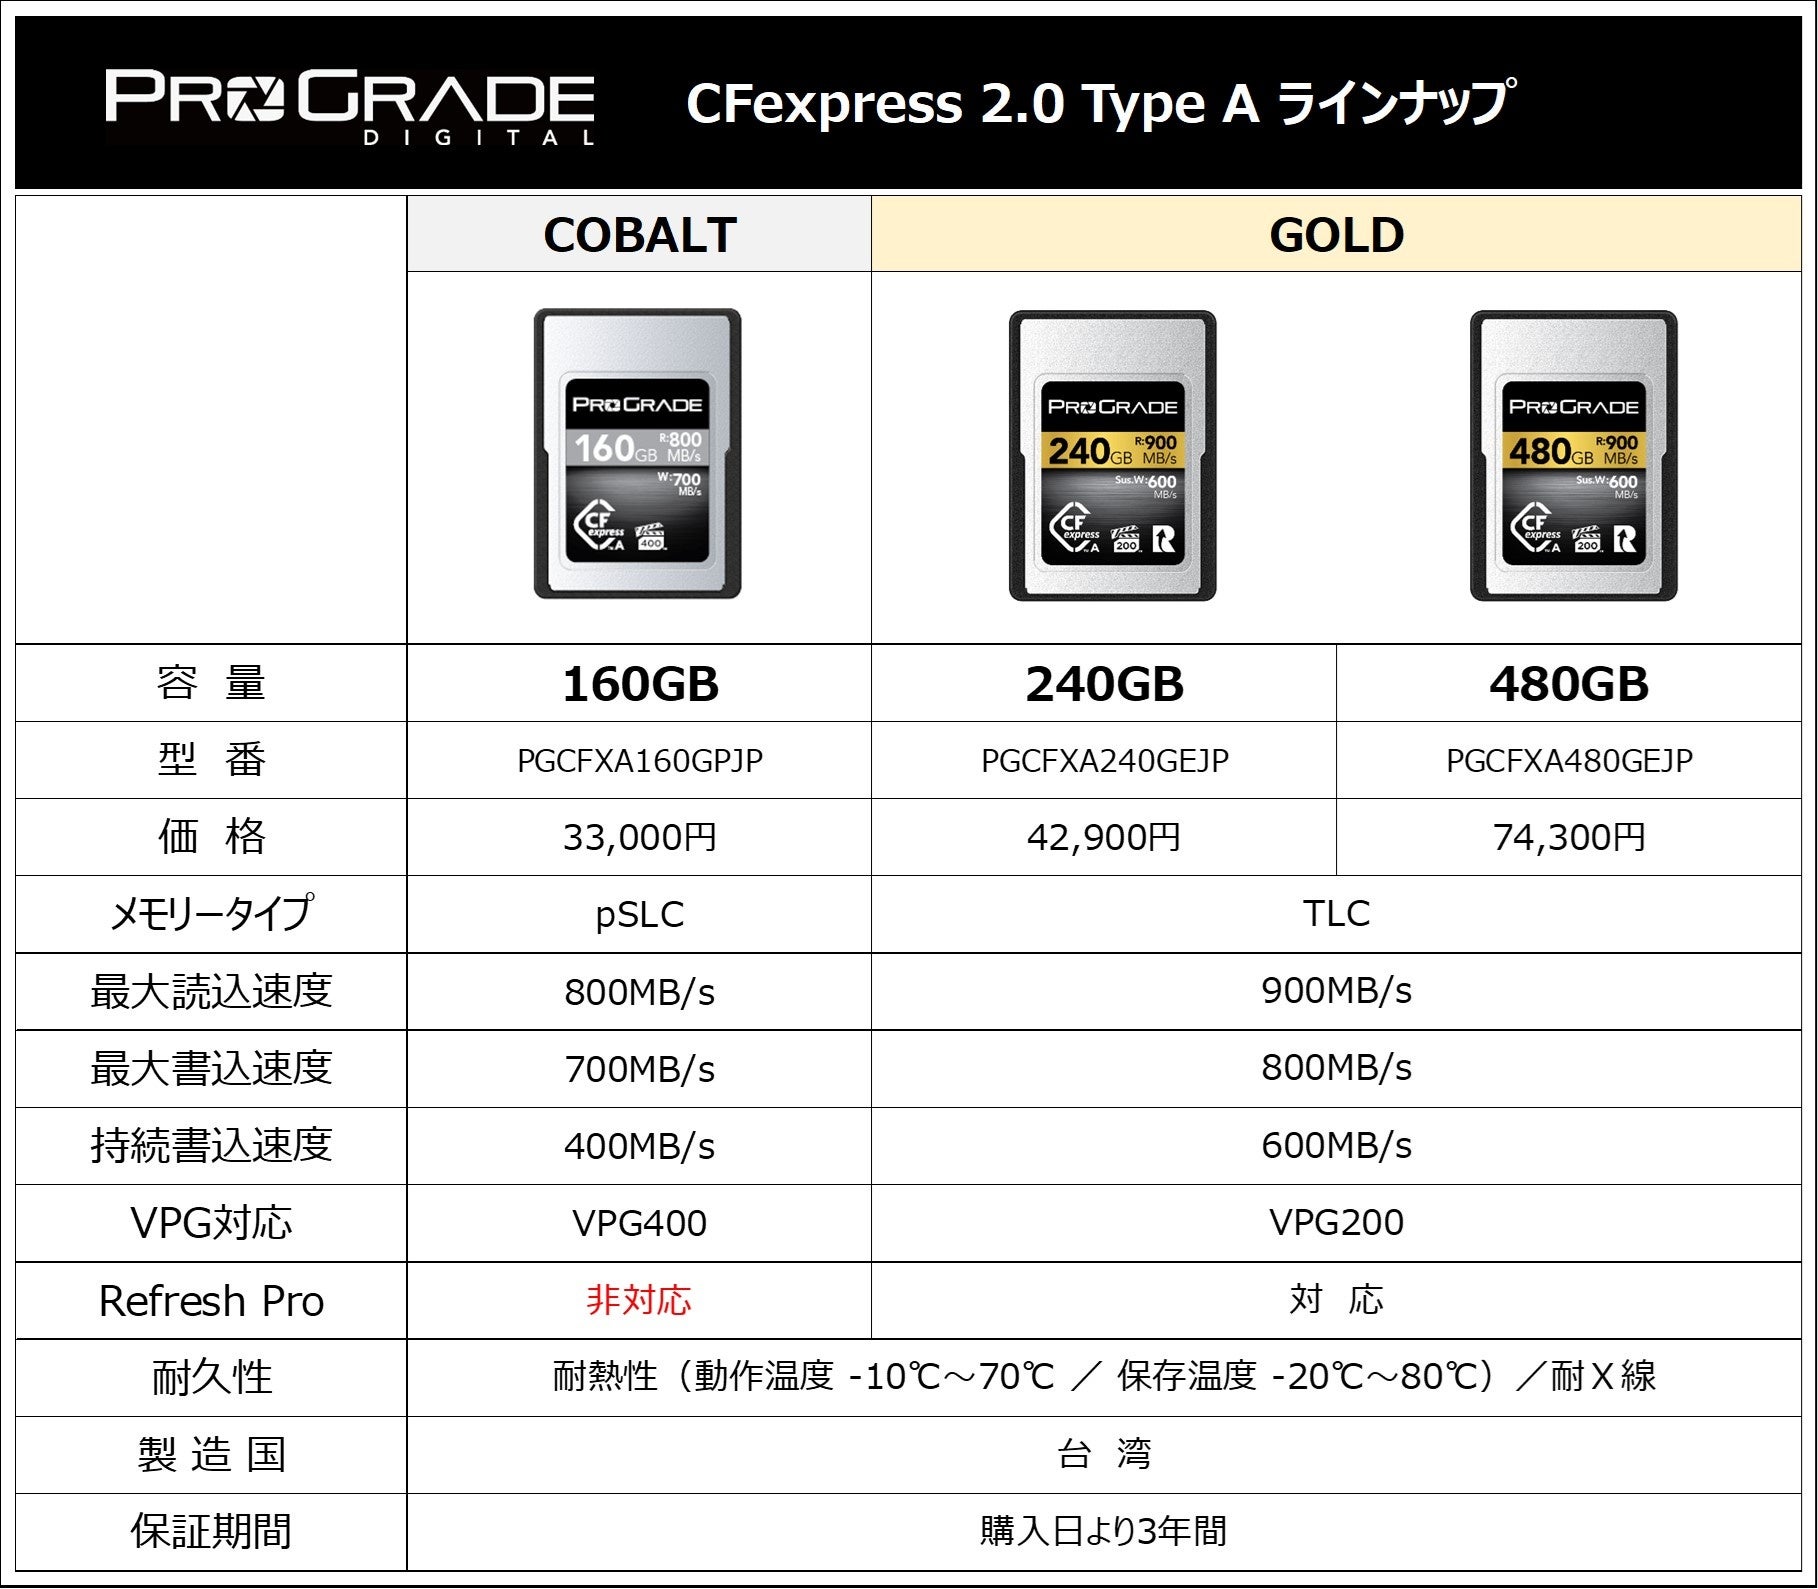 CFexpress 2.0 Type A GOLD 240GB/480GBAmazonŔ̔Jn